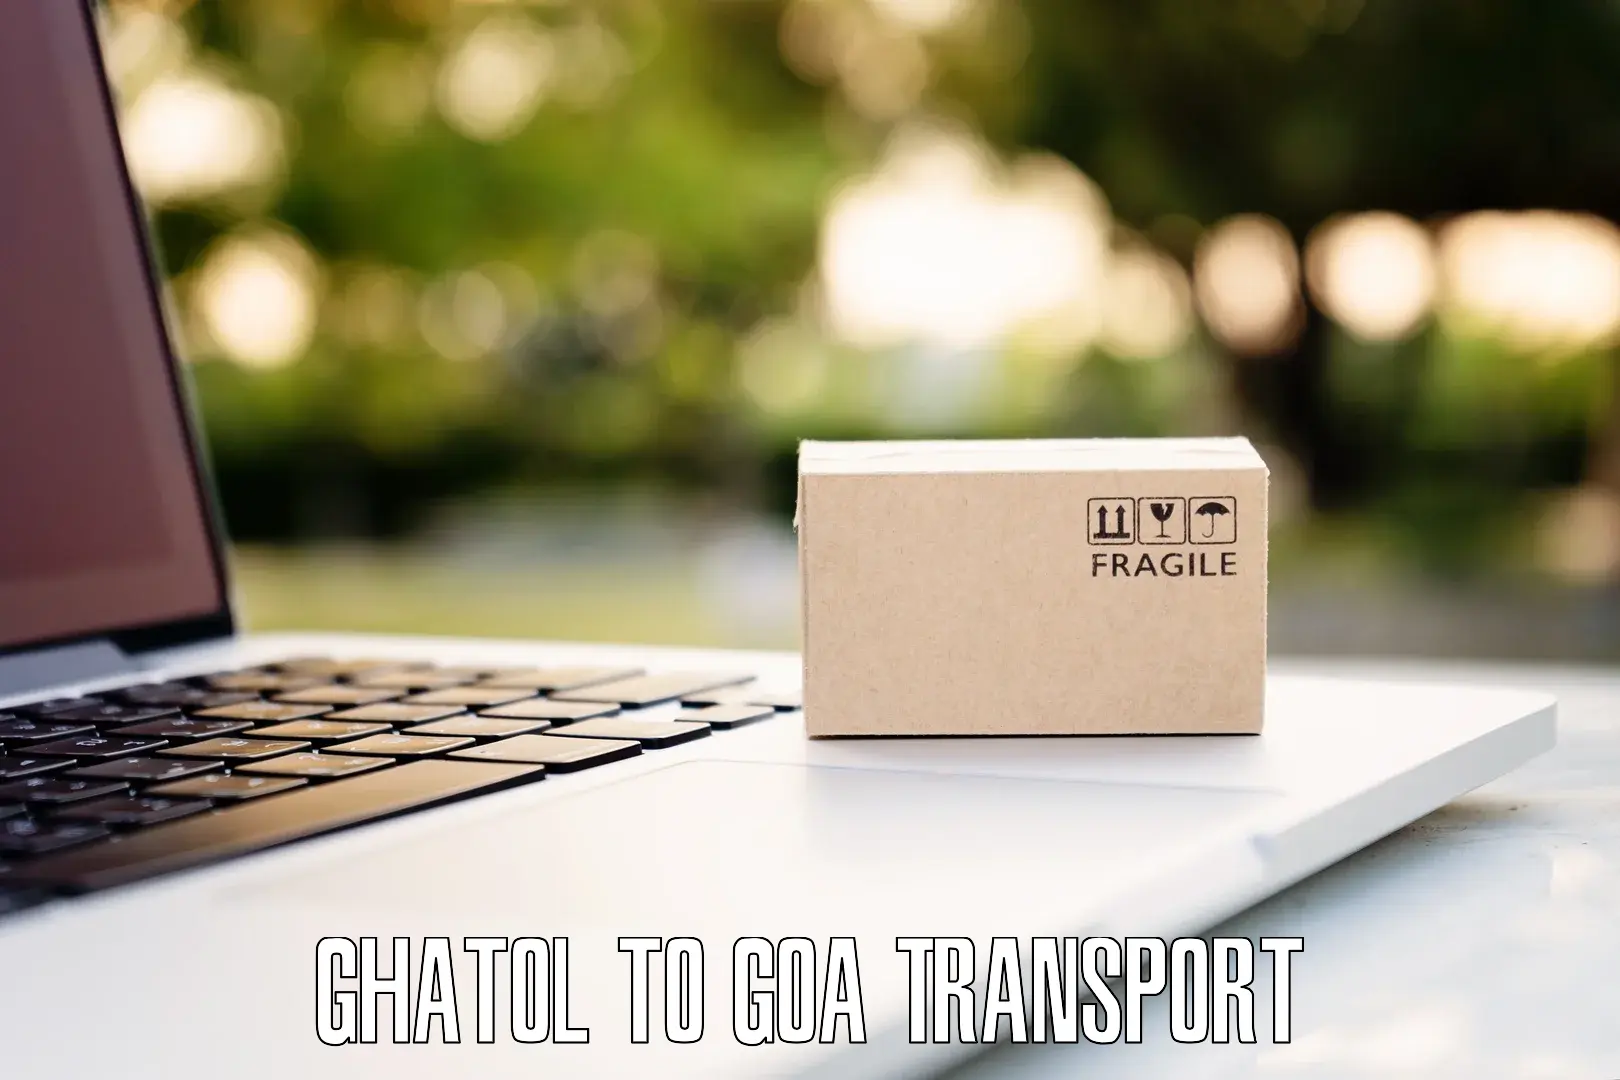 Transport in sharing in Ghatol to Bicholim